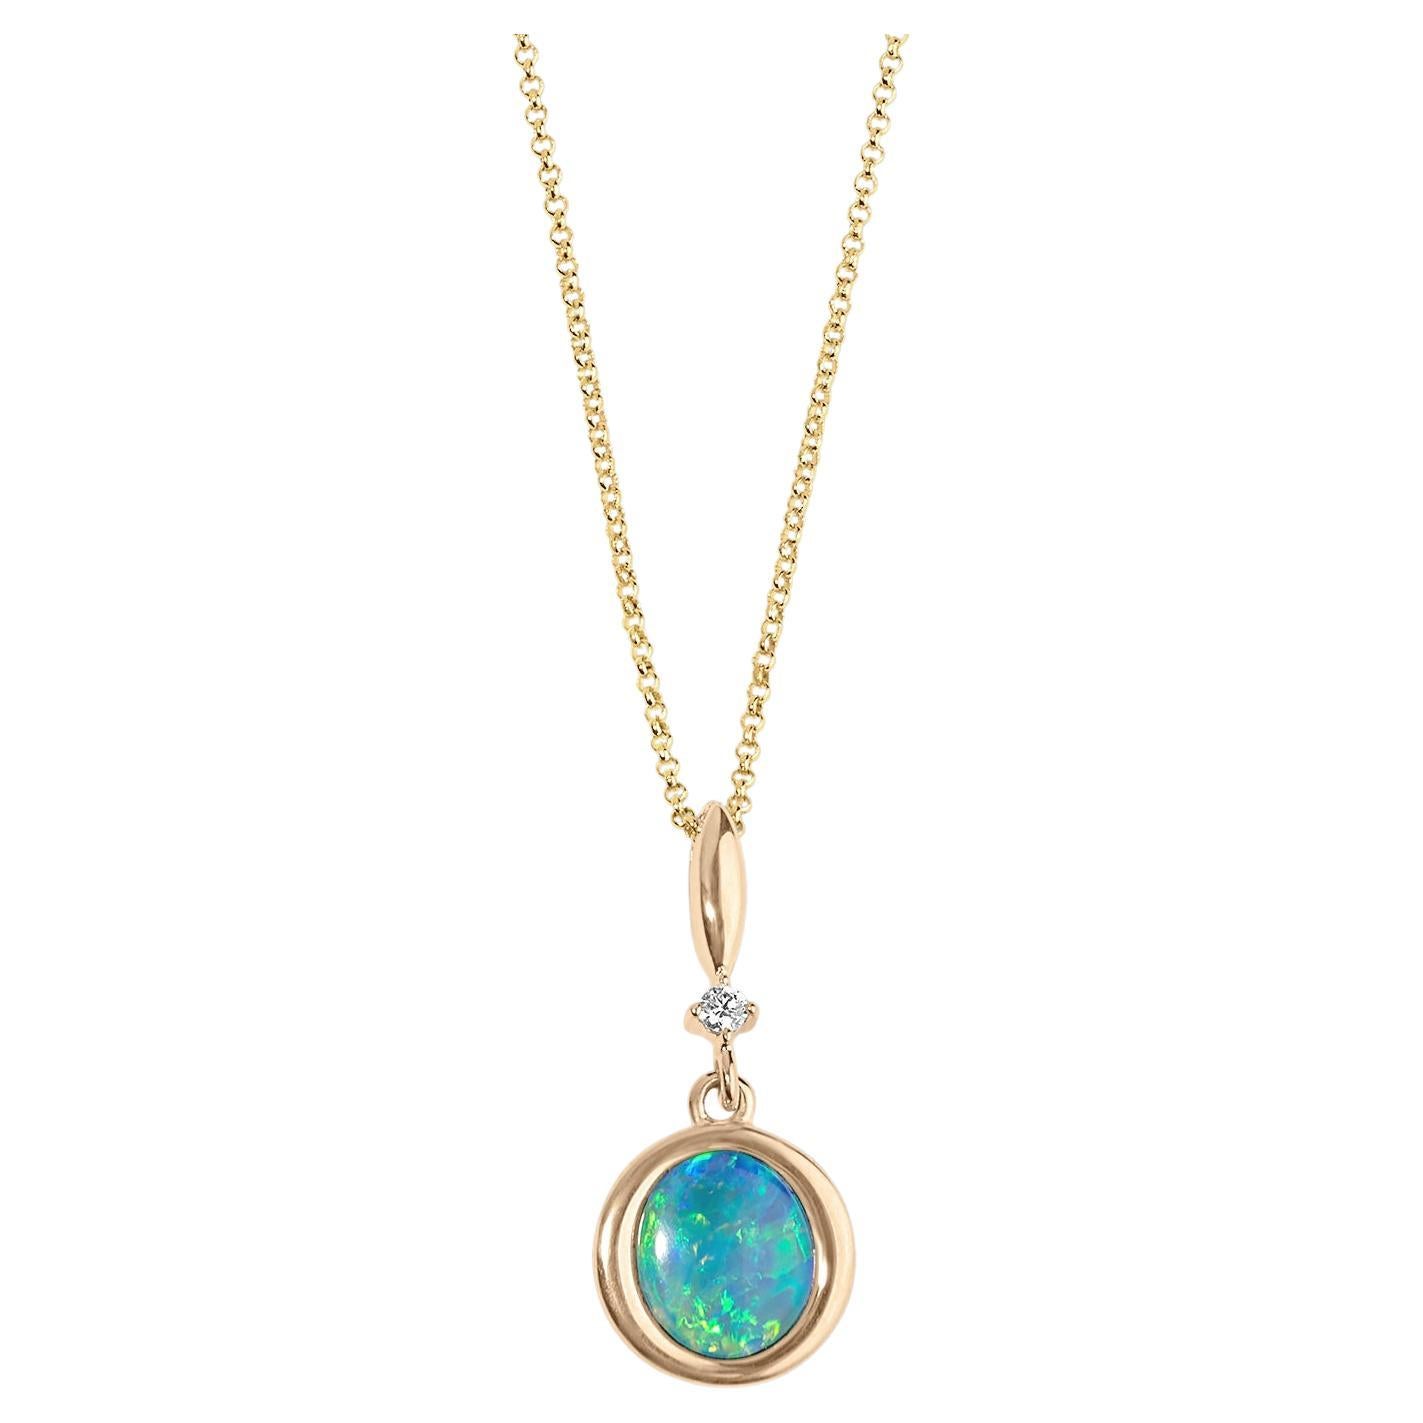 Round, Australian Opal Inlay Pendant with Diamond Detail, 14kt Gold by Kabana